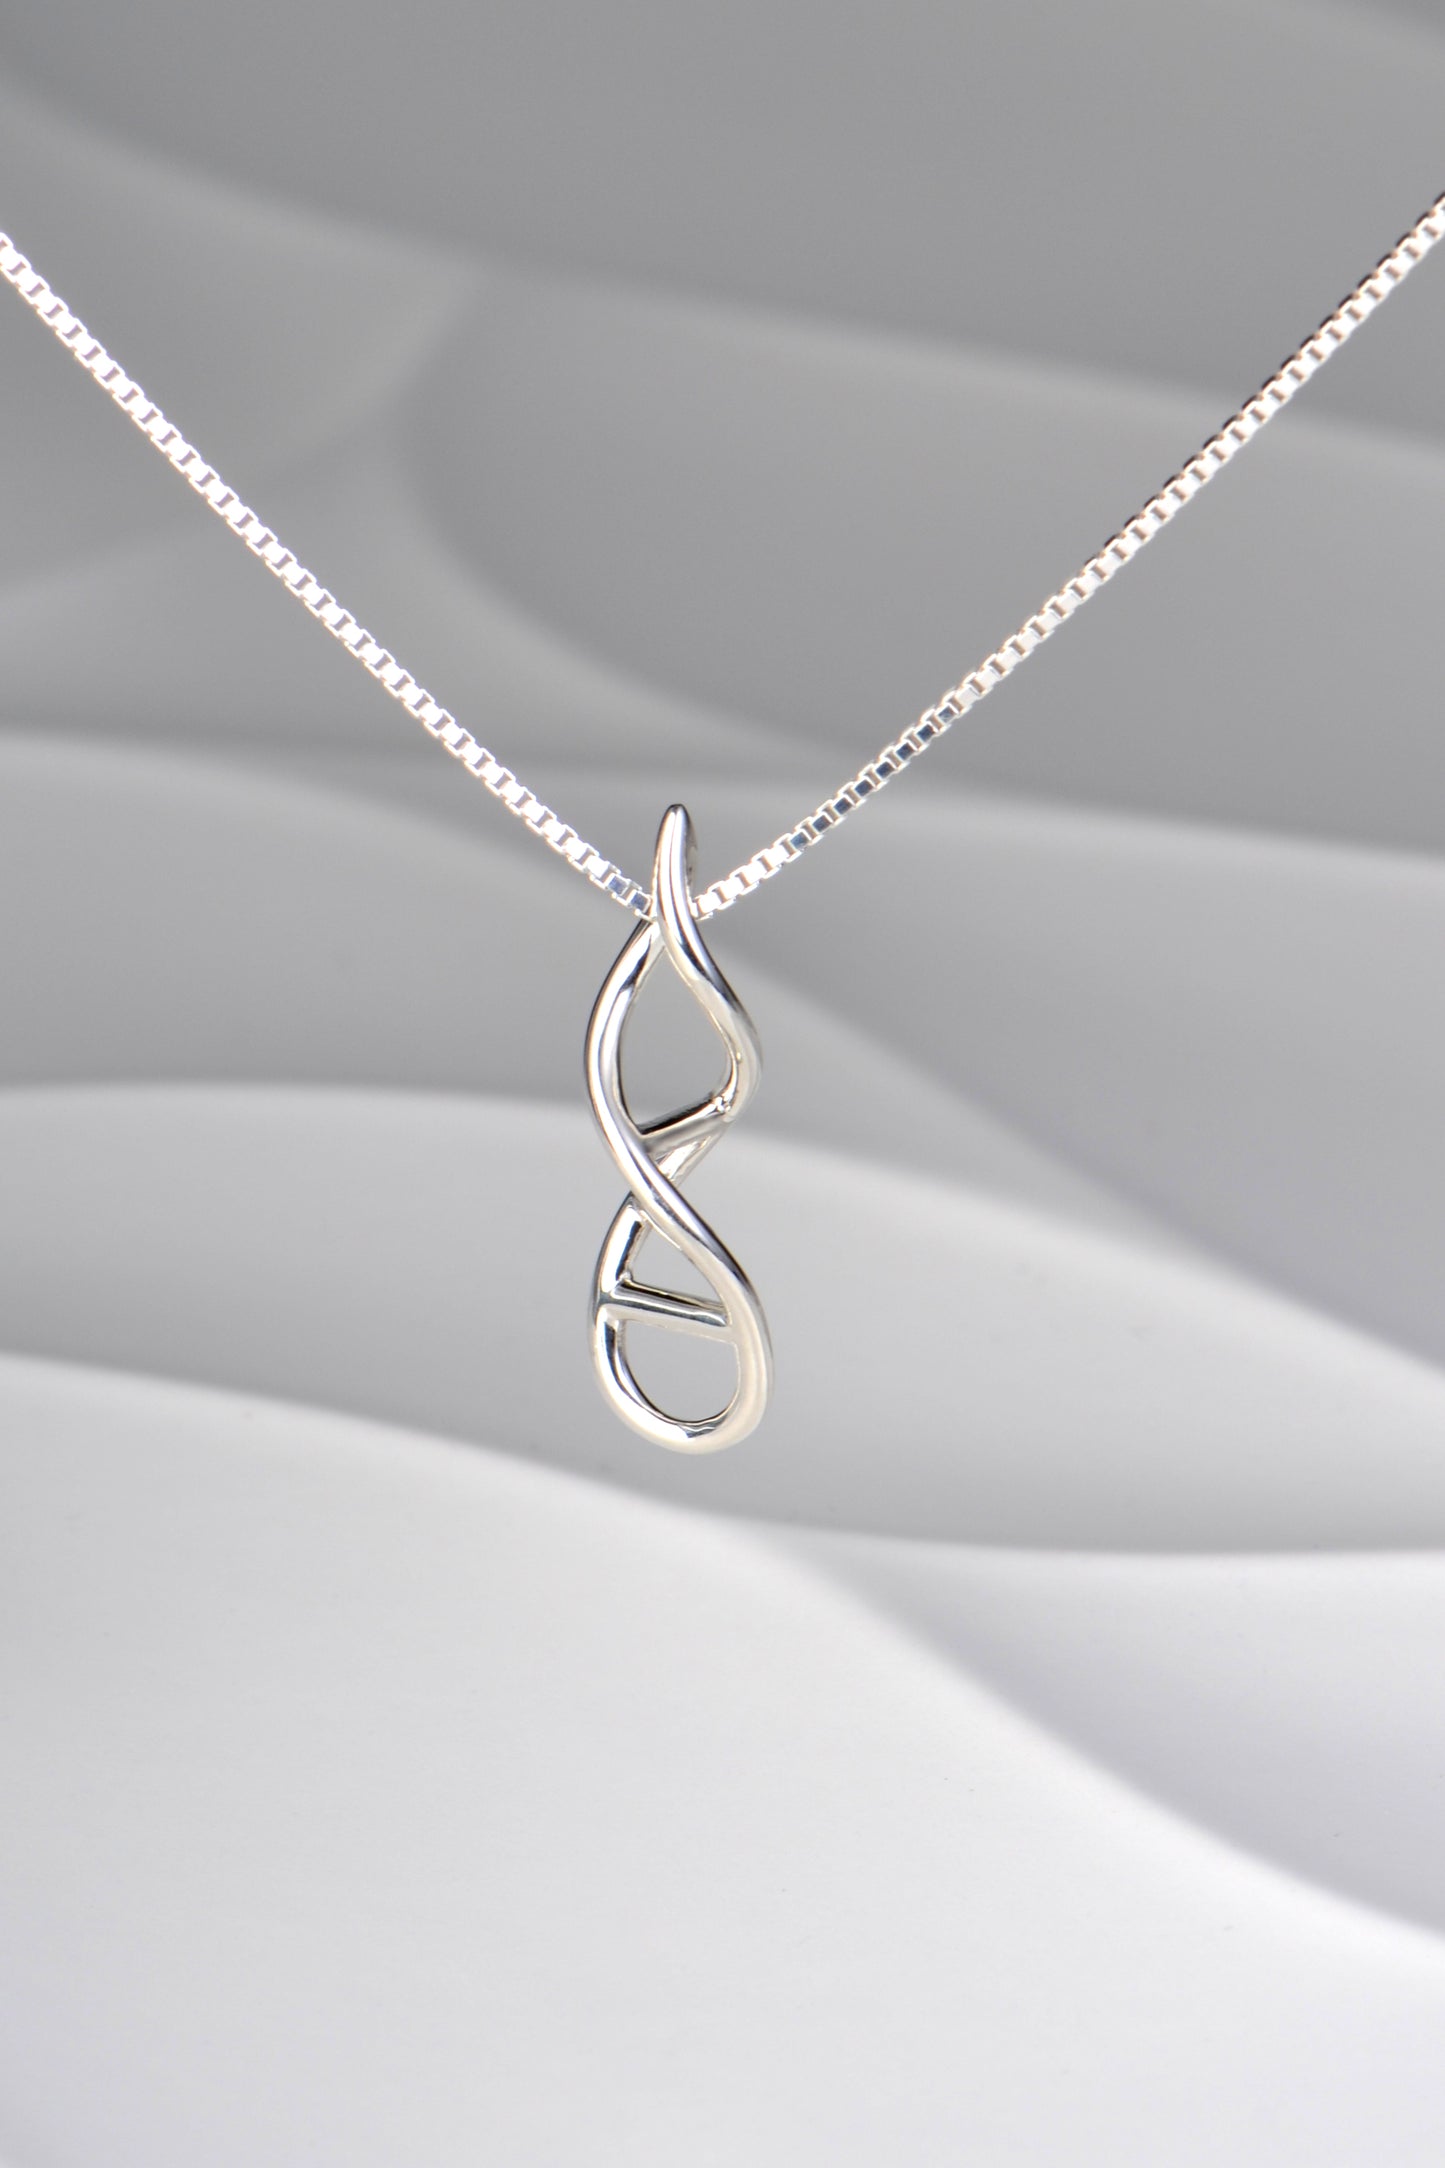 Designer Genes silver pendant